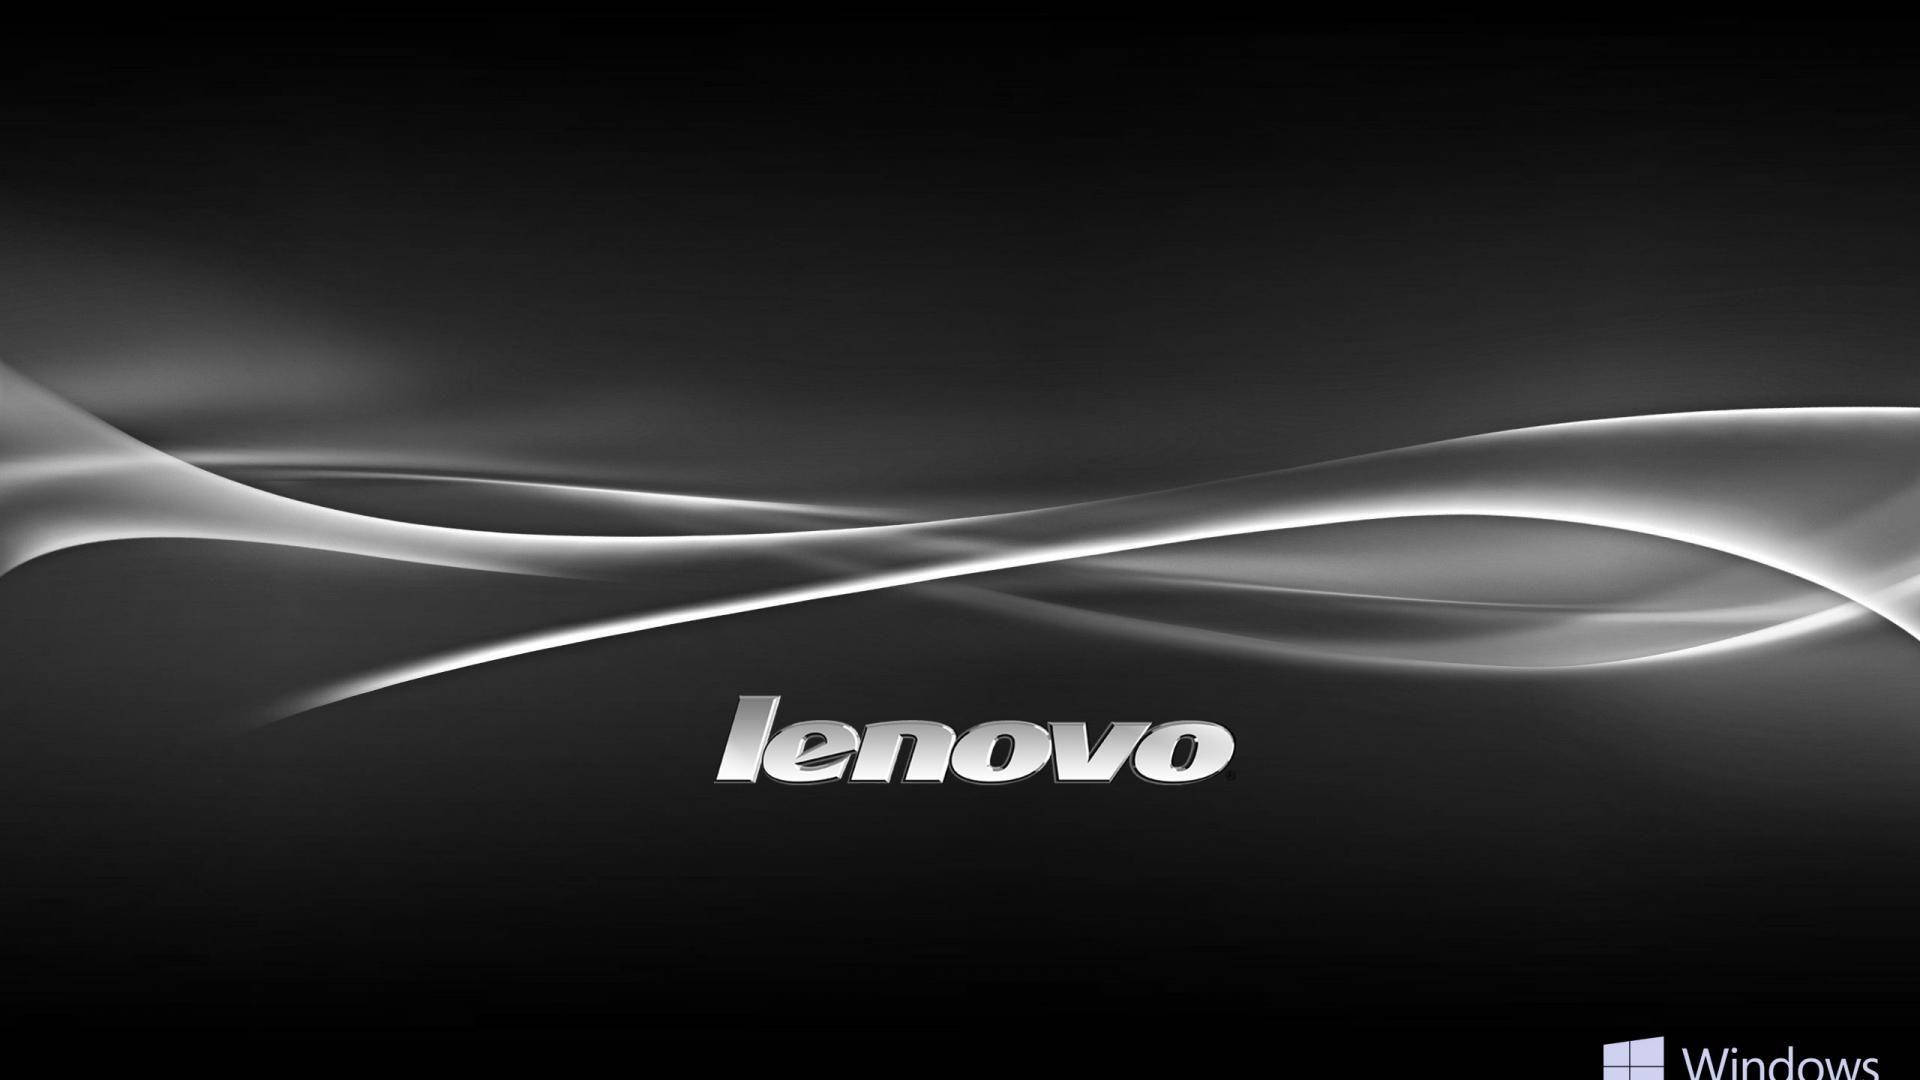 Windowslogo Lenovo Hd Wallpaper